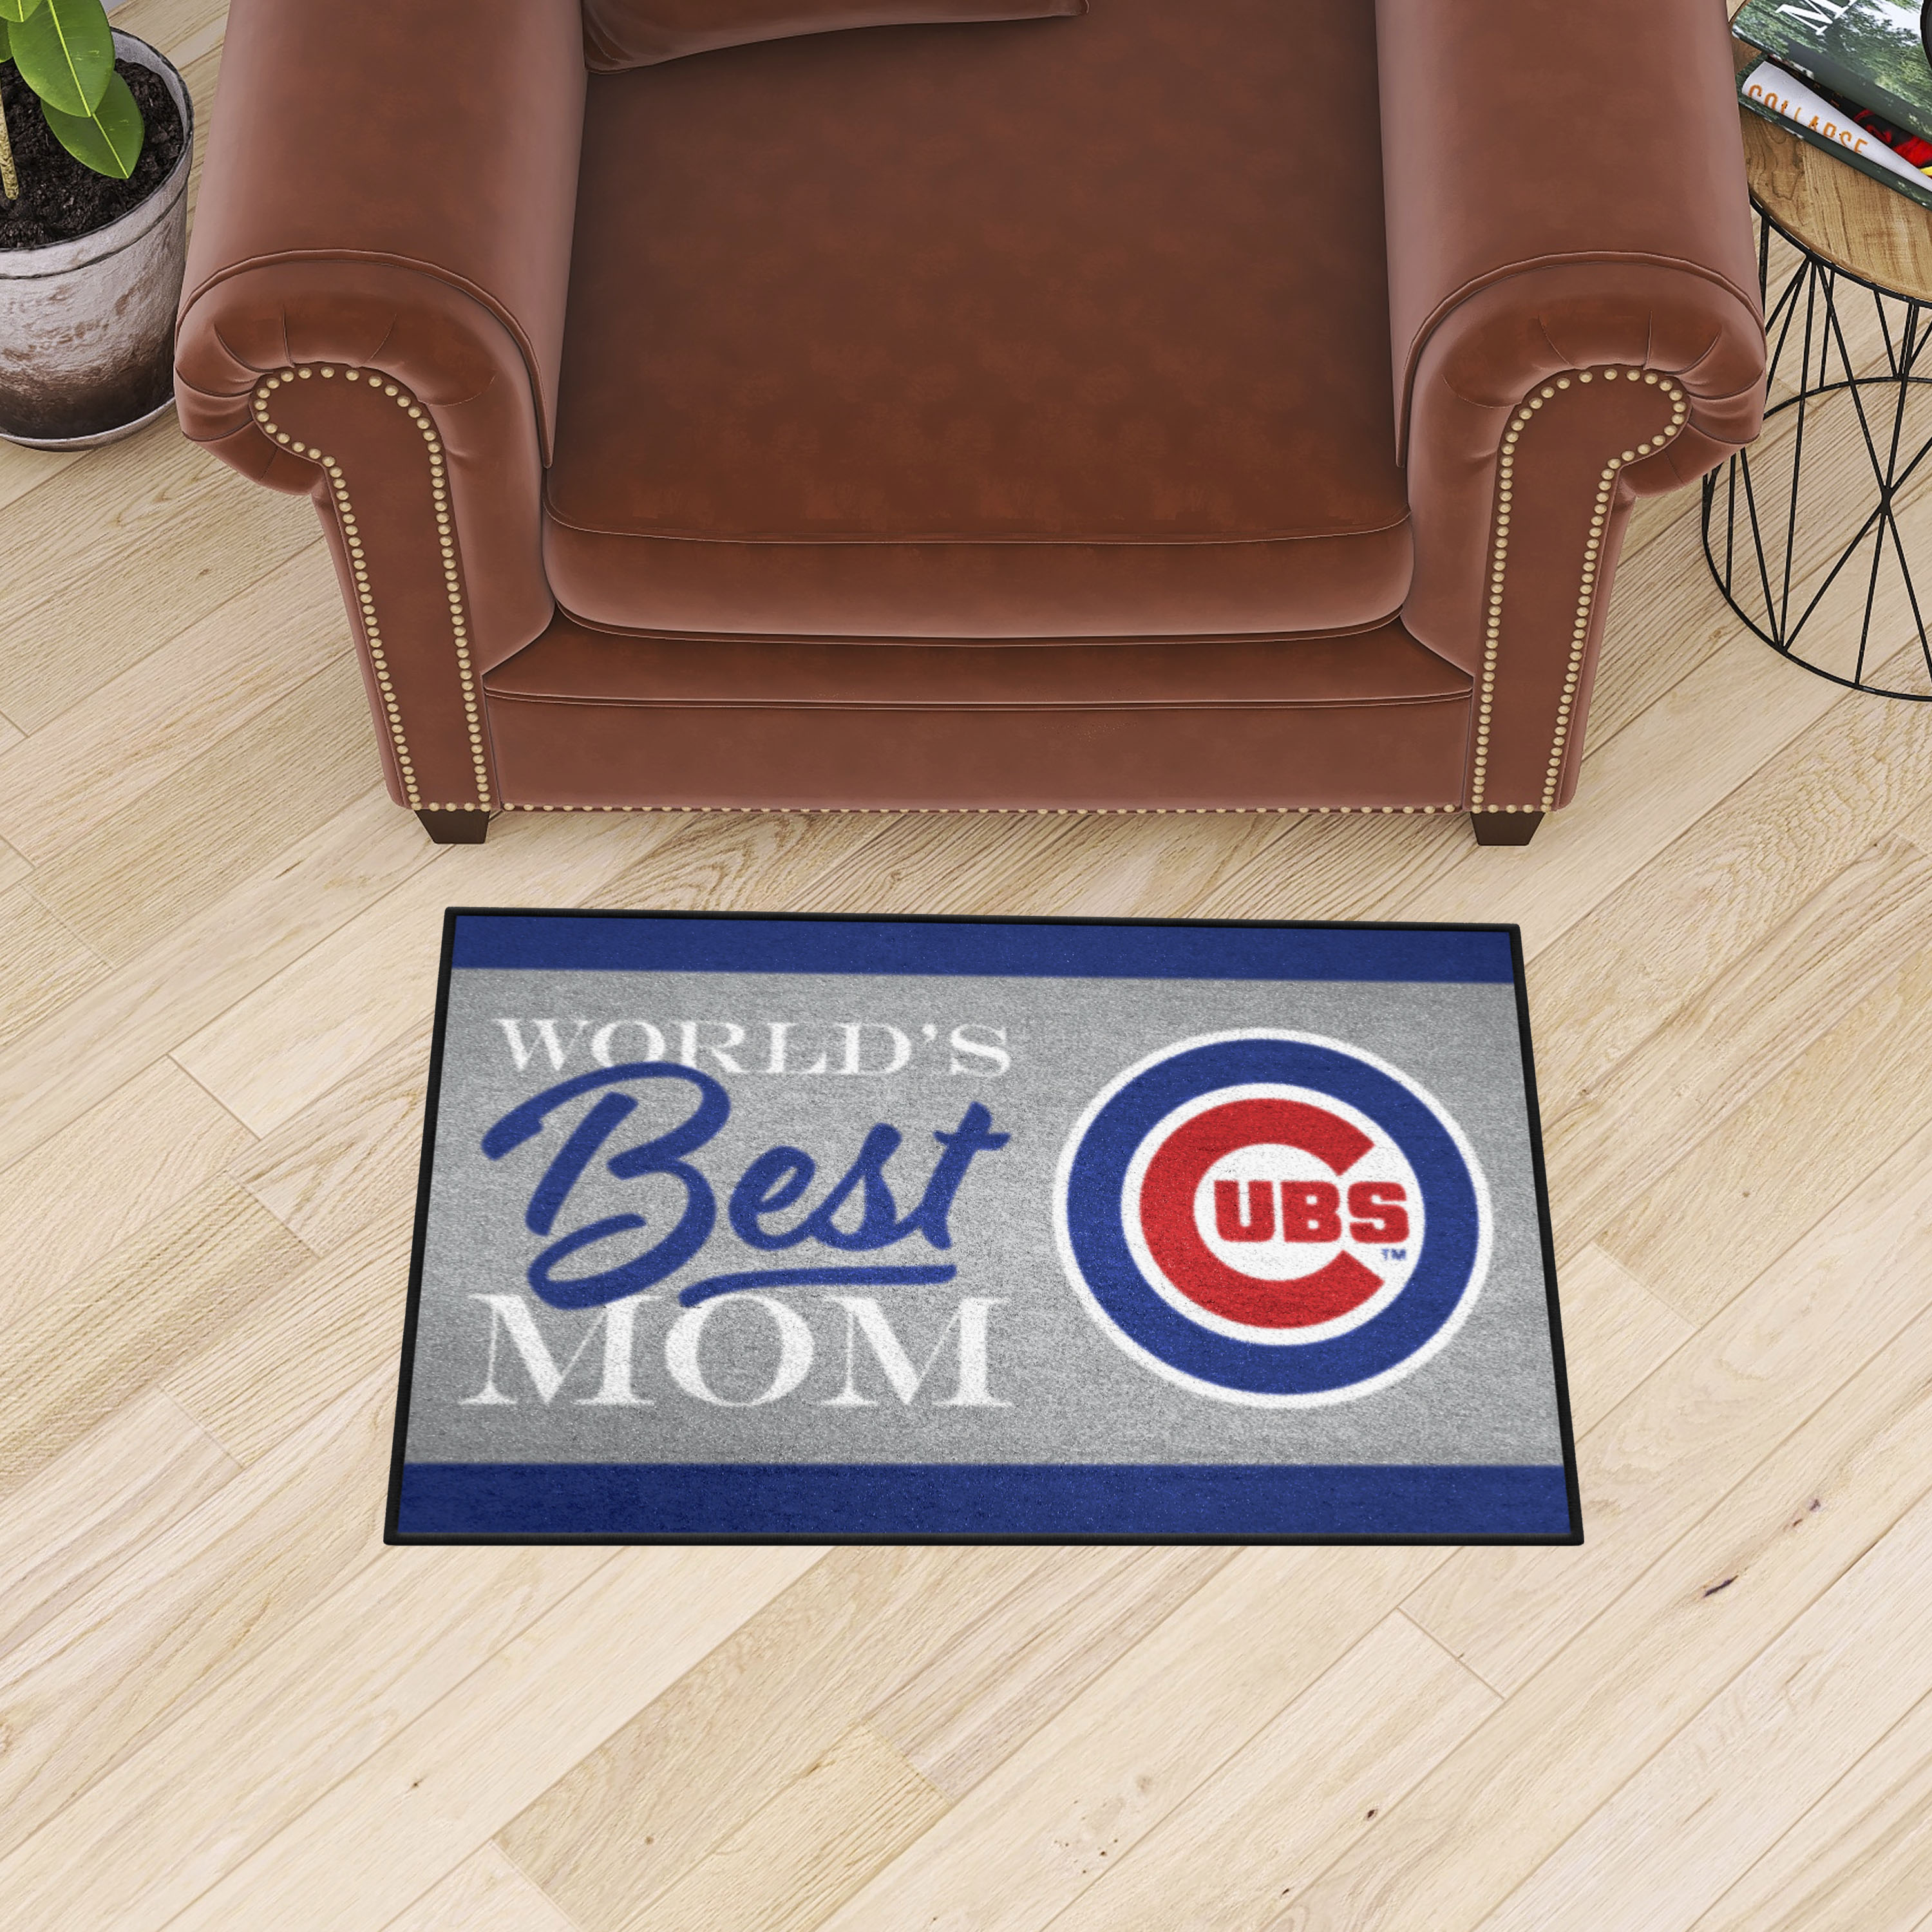 Chicago Cubs World's Best Mom Starter Doormat - 19 x 30